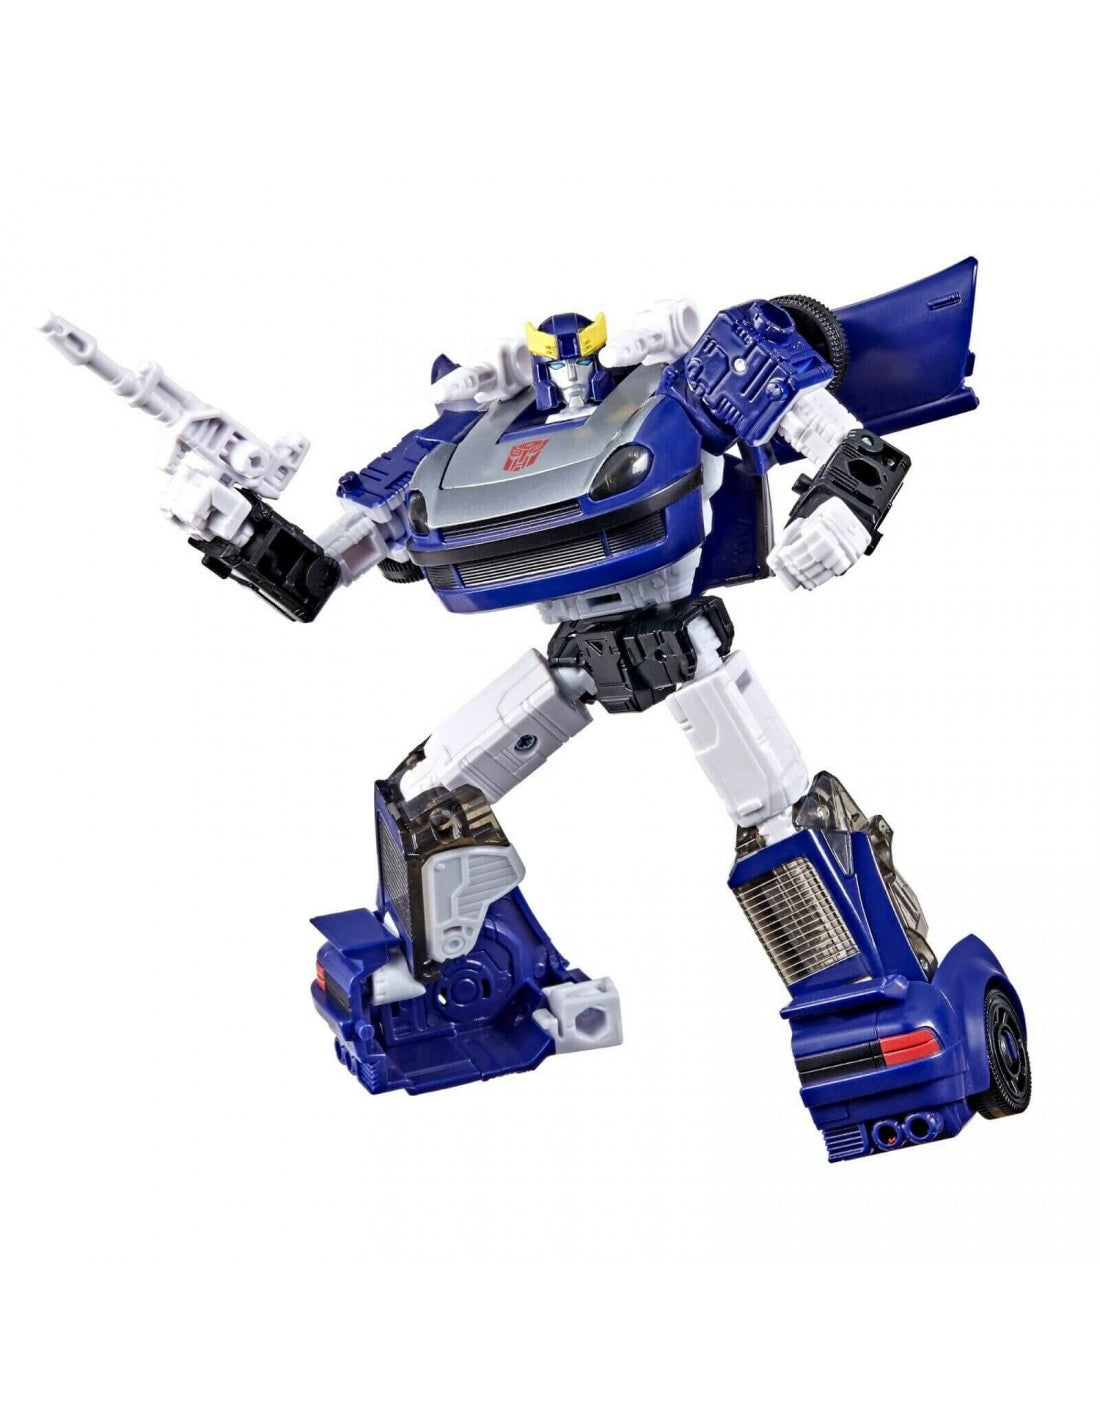 Transformers Legacy Deluxe Class Buzzworthy Bumblebee Autobot Silverstreak Action Figure